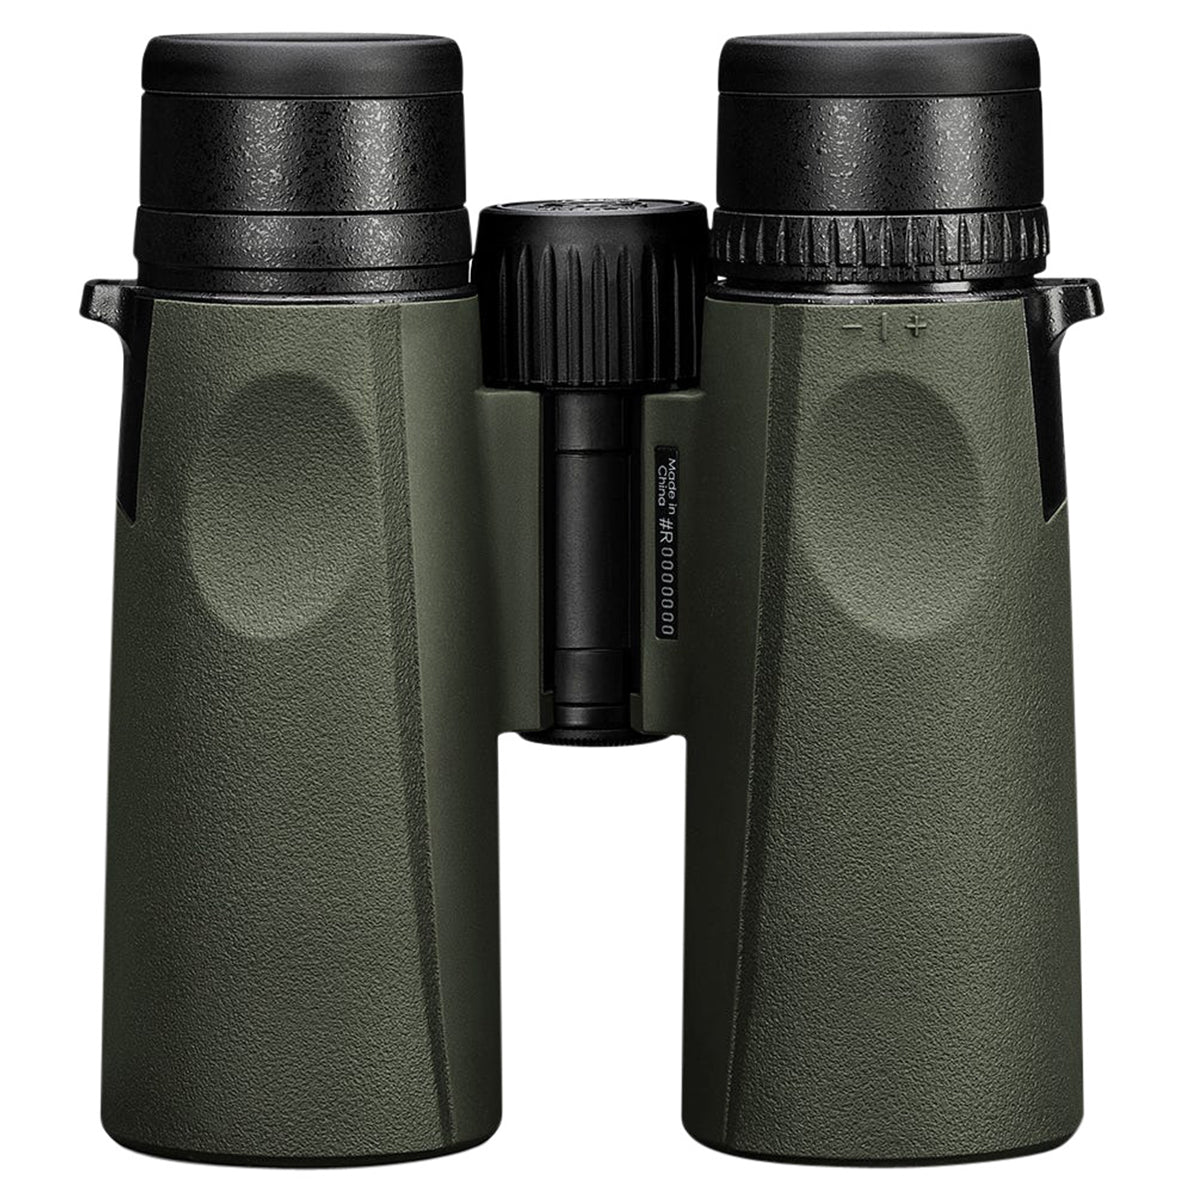 Vortex Viper HD 8x42 Binoculars in Vortex Viper HD 8x42 Binoculars by Vortex Optics | Optics - goHUNT Shop by GOHUNT | Vortex Optics - GOHUNT Shop